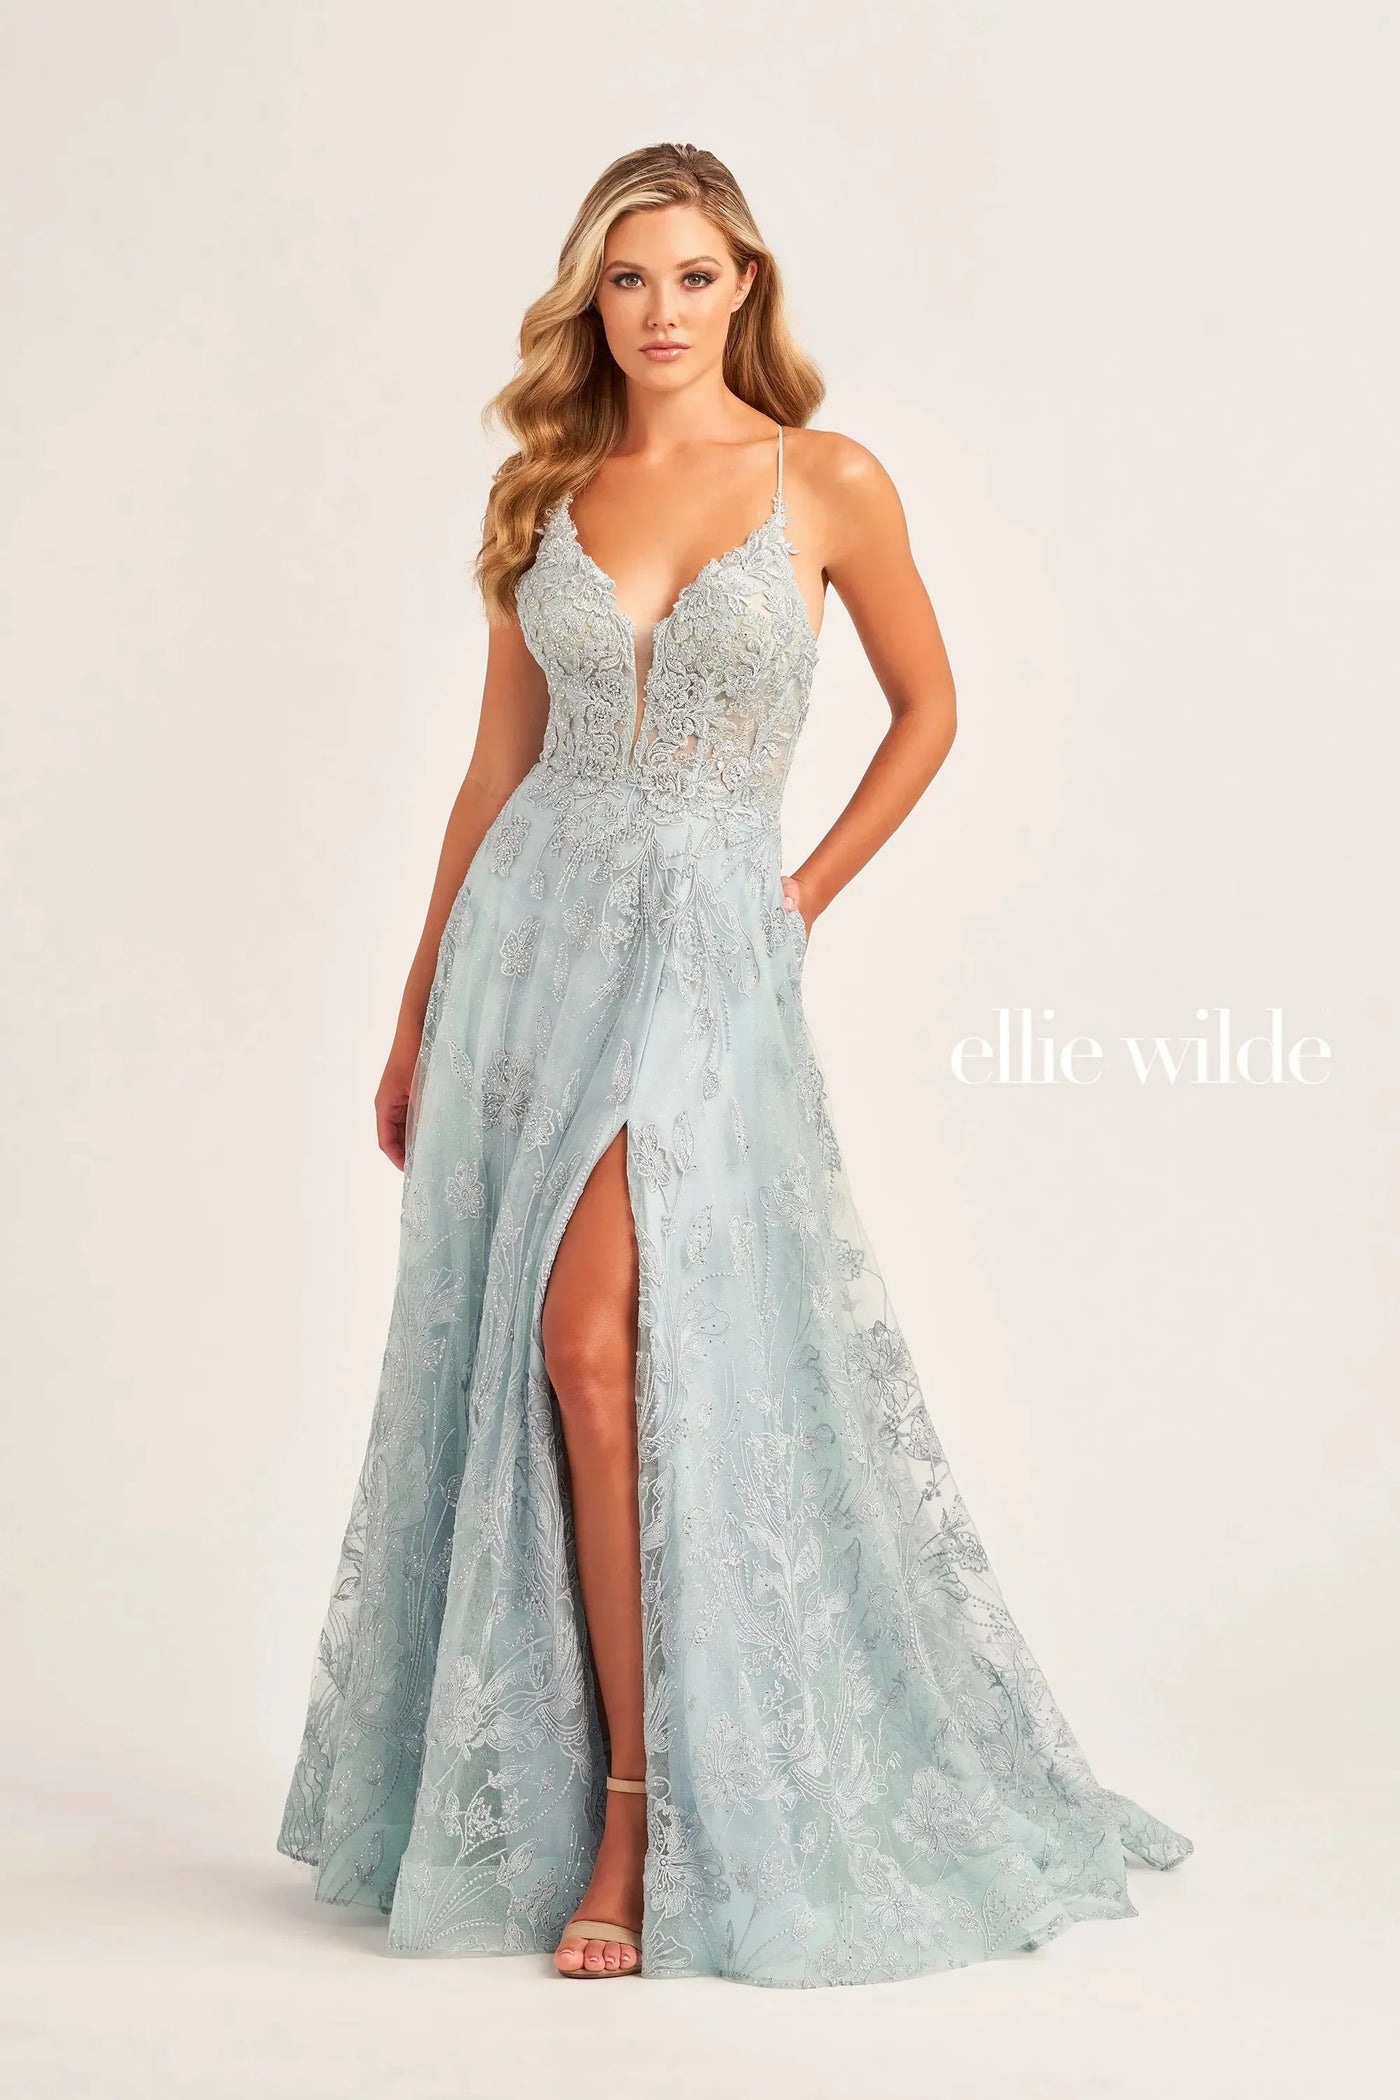 Ellie Wilde EW35103 - Floral A-Line Evening Dress